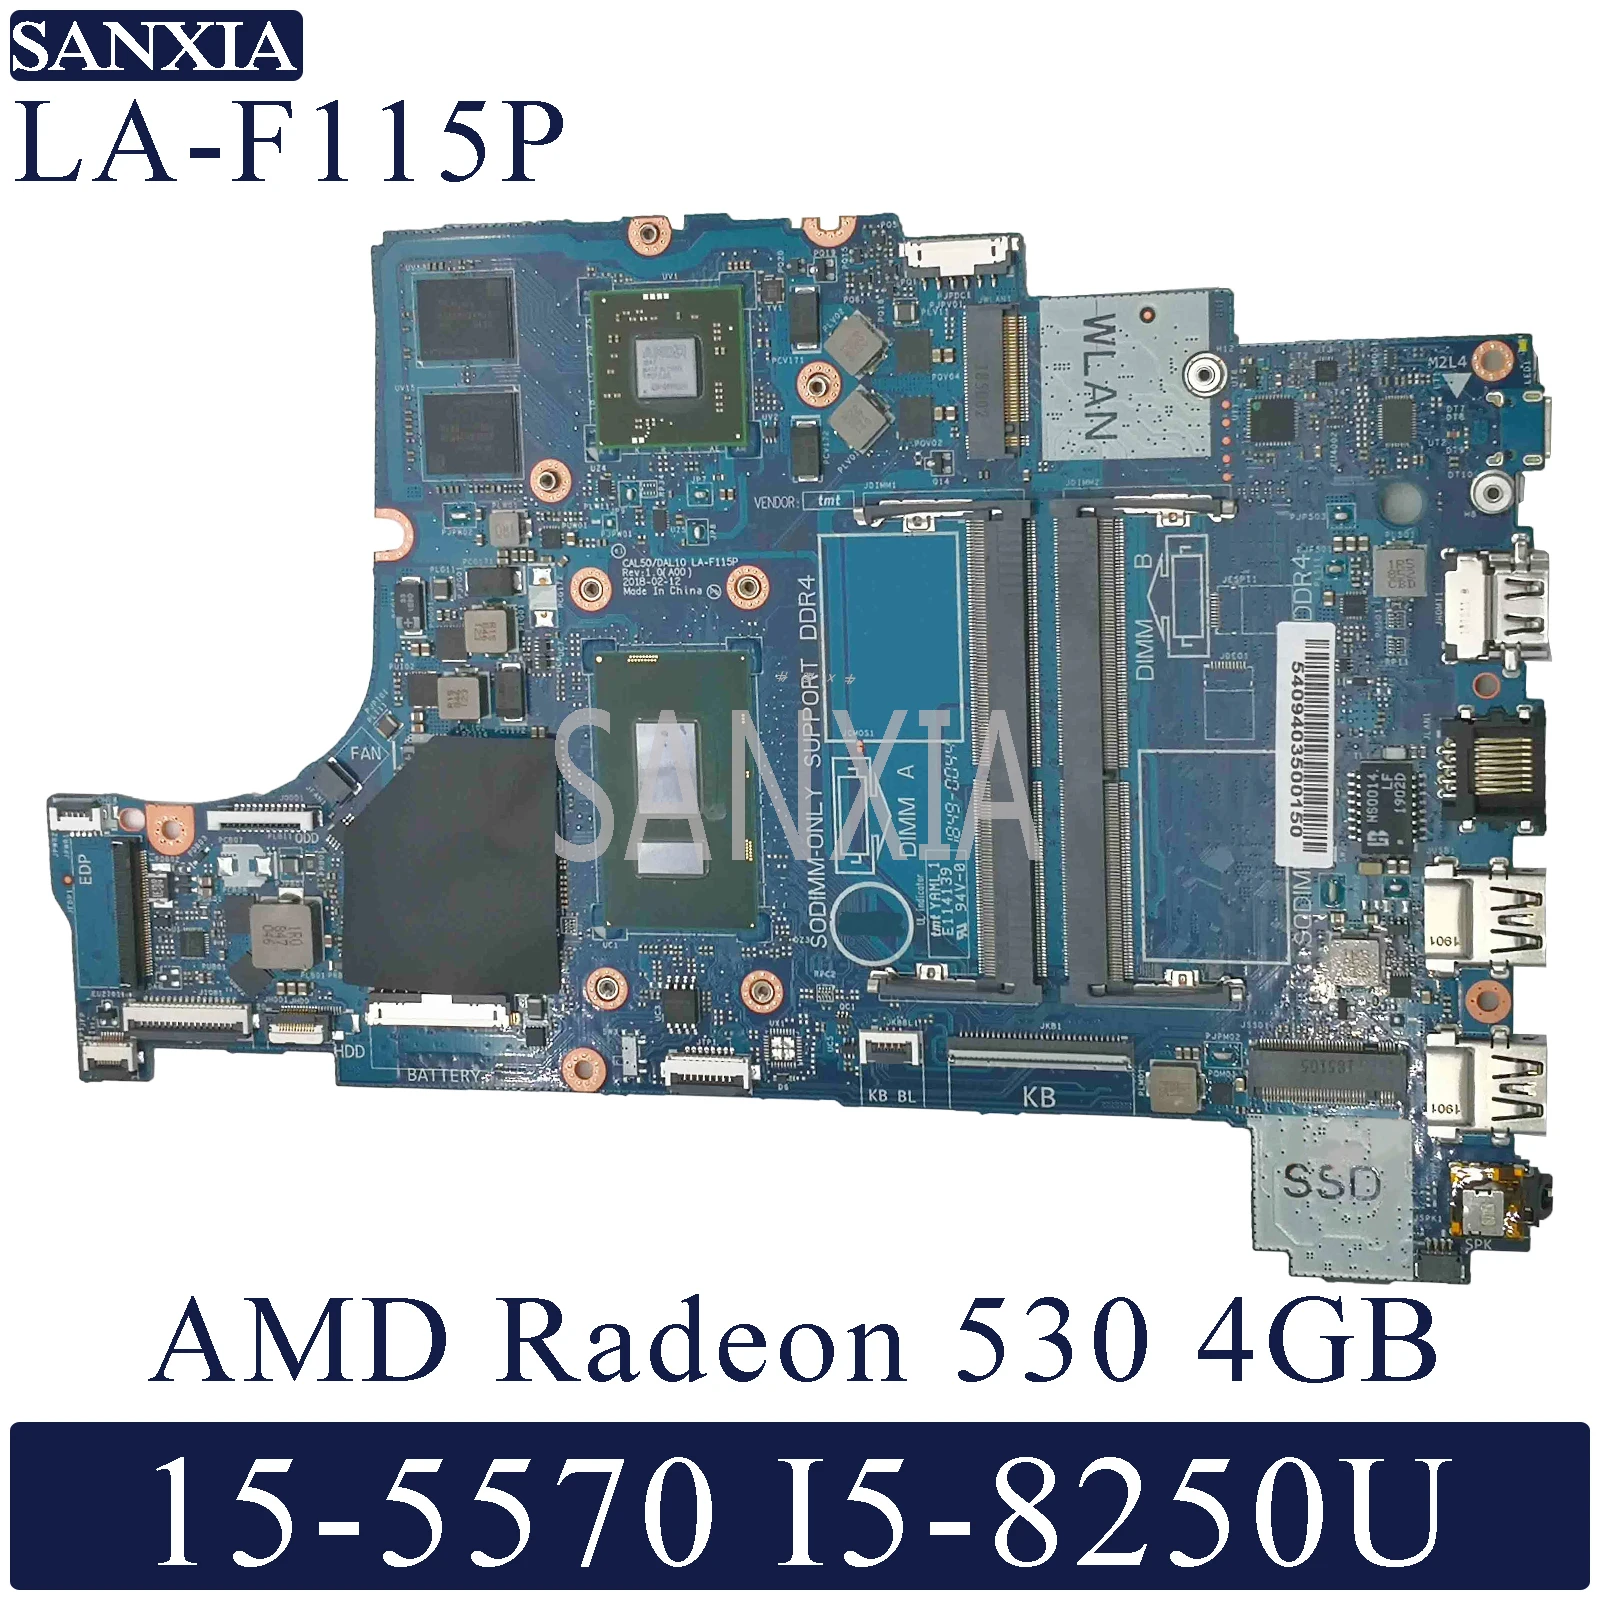 

KEFU LA-F115P Laptop motherboard for Dell Inspiron 15-5570 17-5770 original mainboard I5-8250U AMD 530 4GB